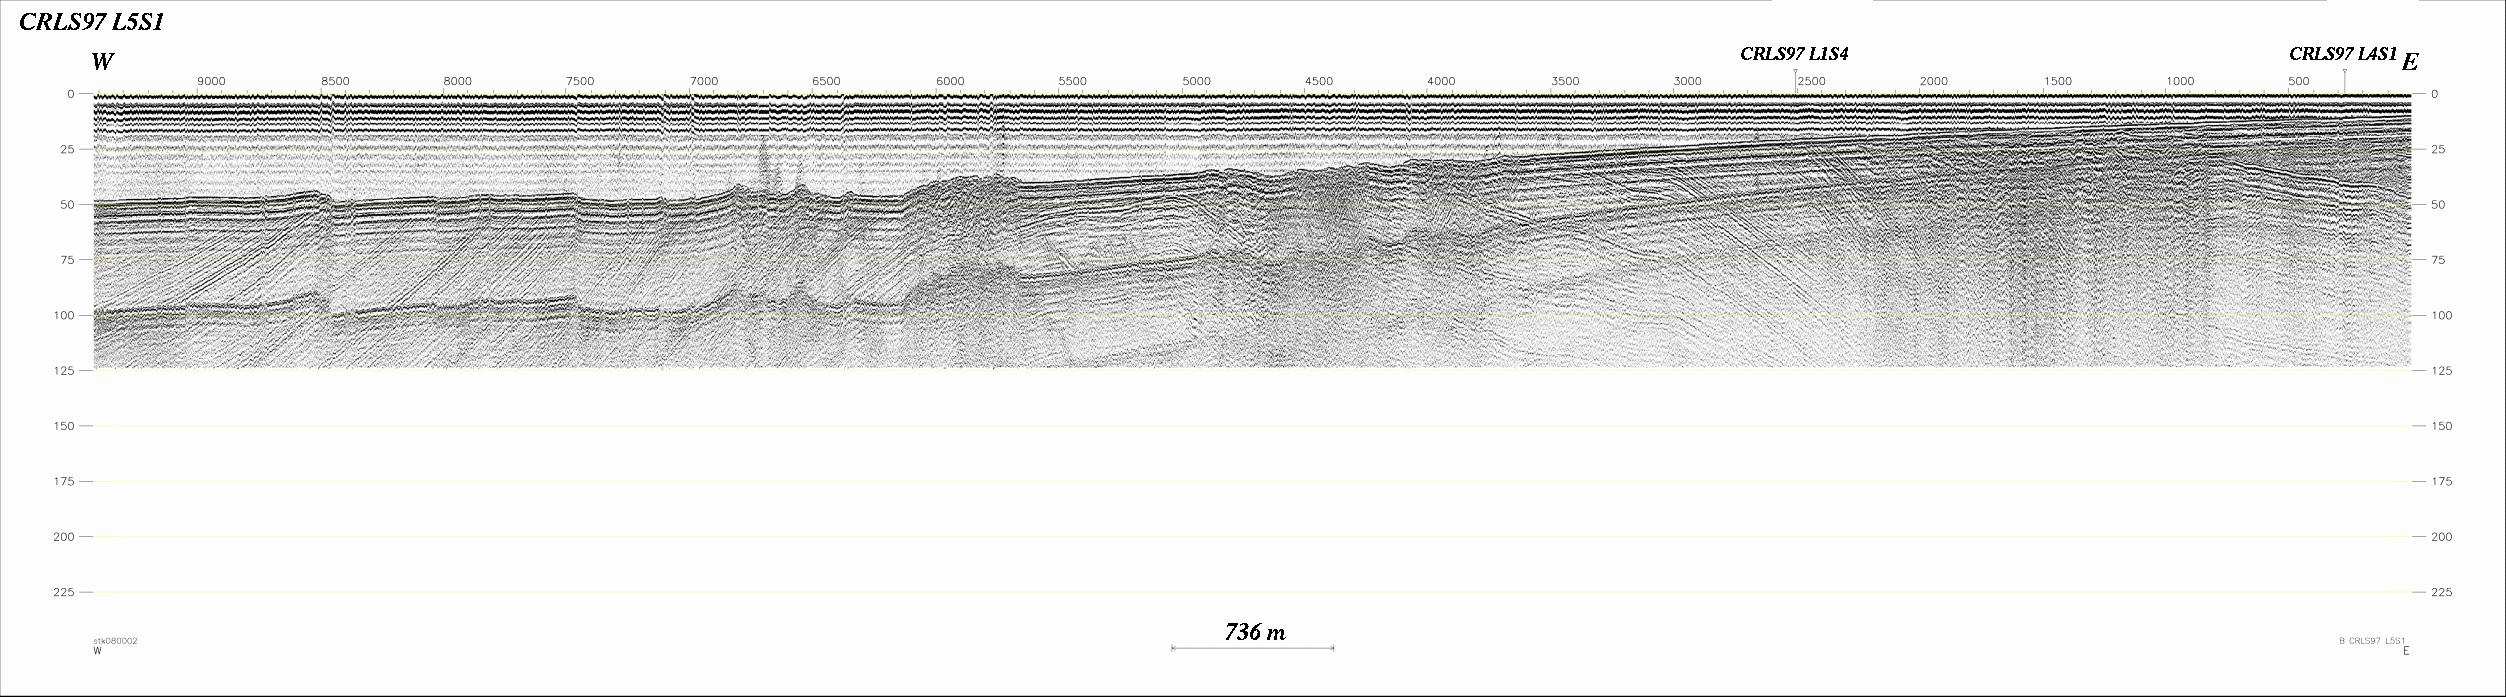 Seismic Reflection Profile Line No.: L5s1 (332111 bytes)